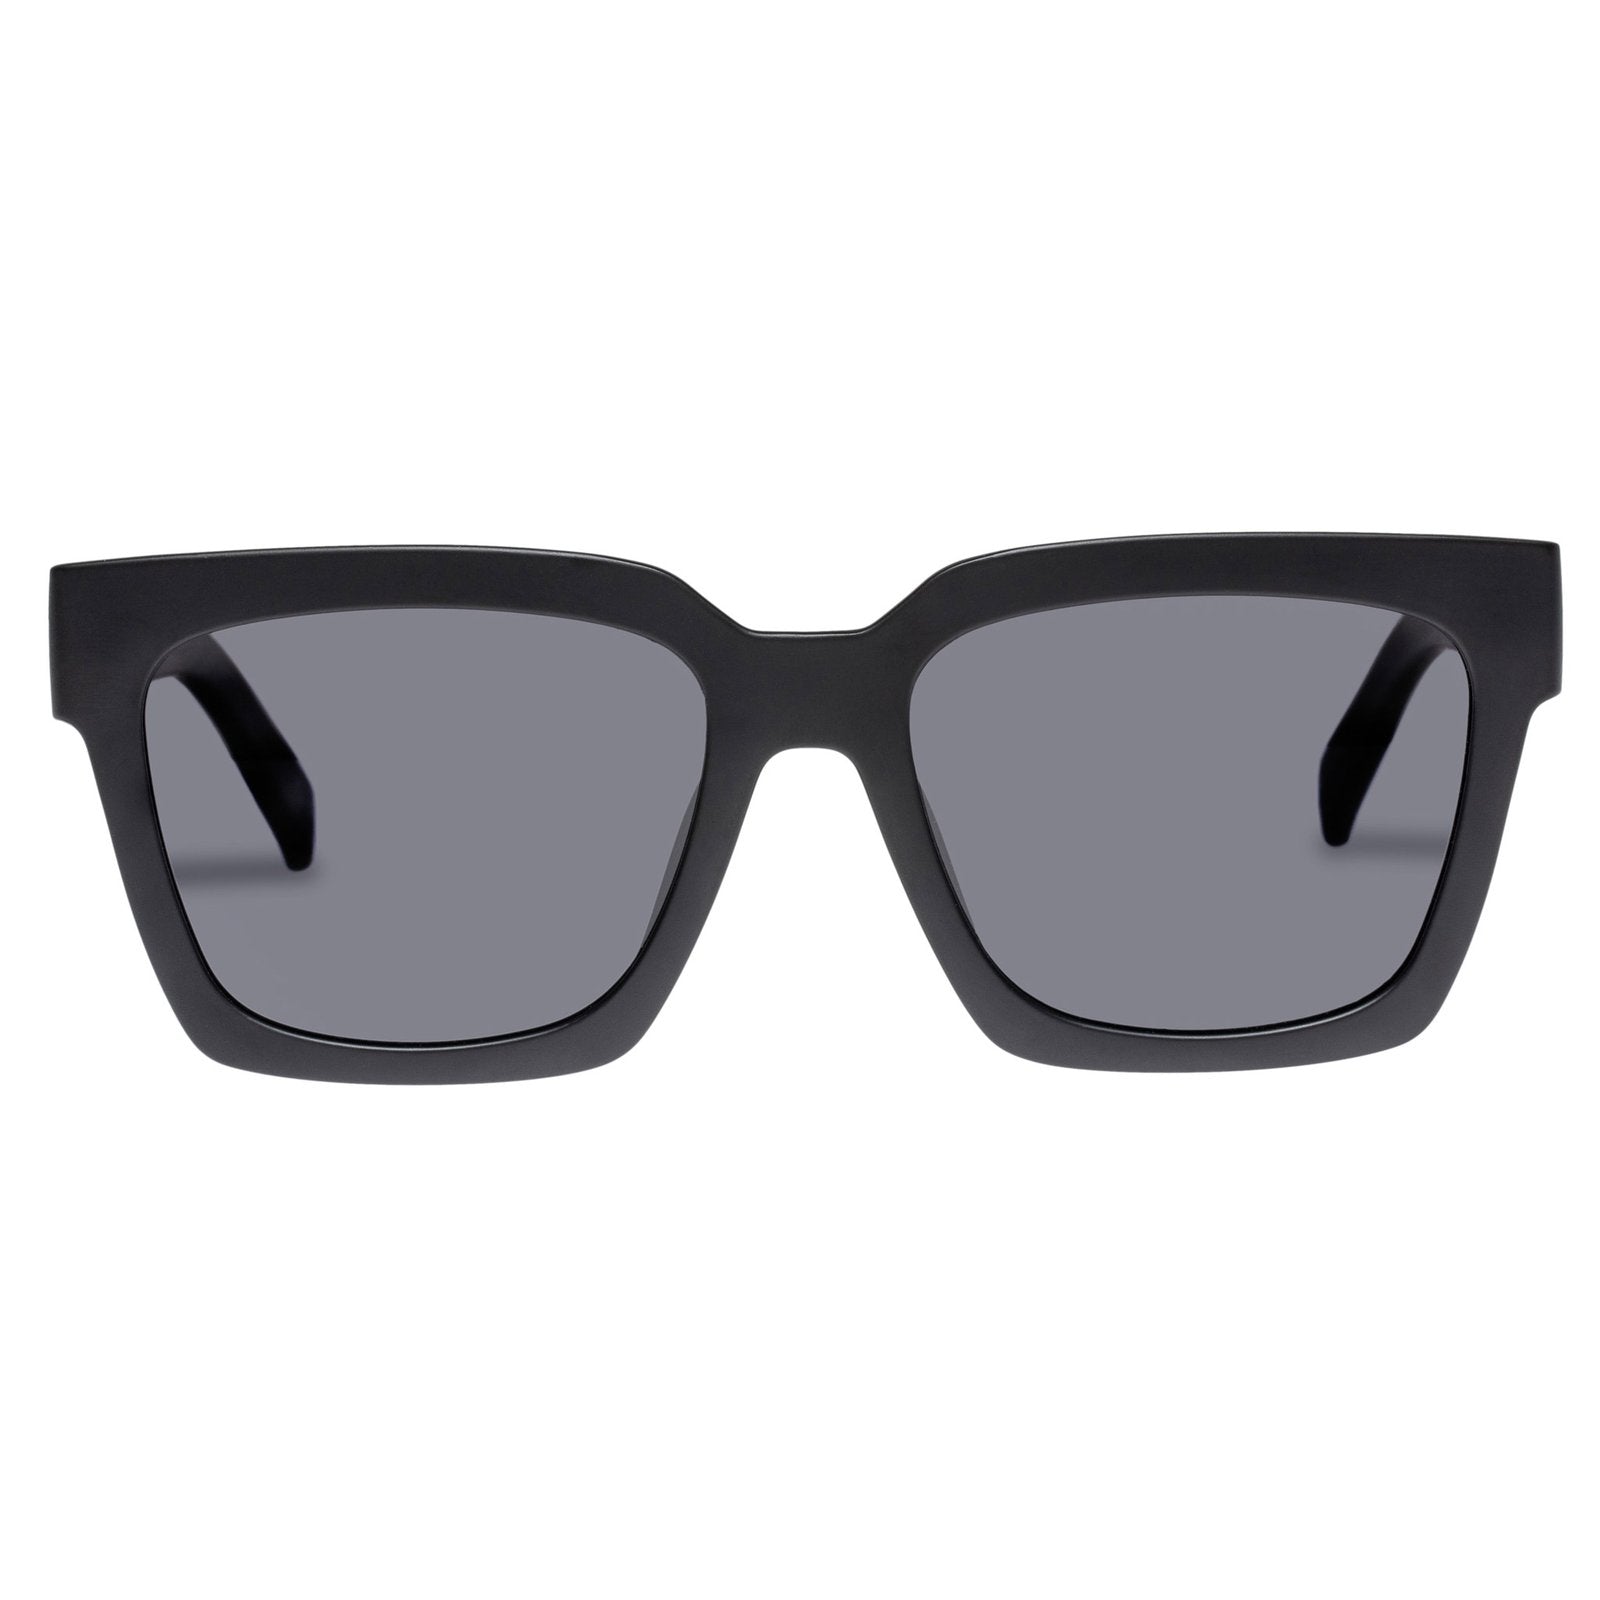 Le Specs glasses - Weekend Riot - Polarized Matt Black